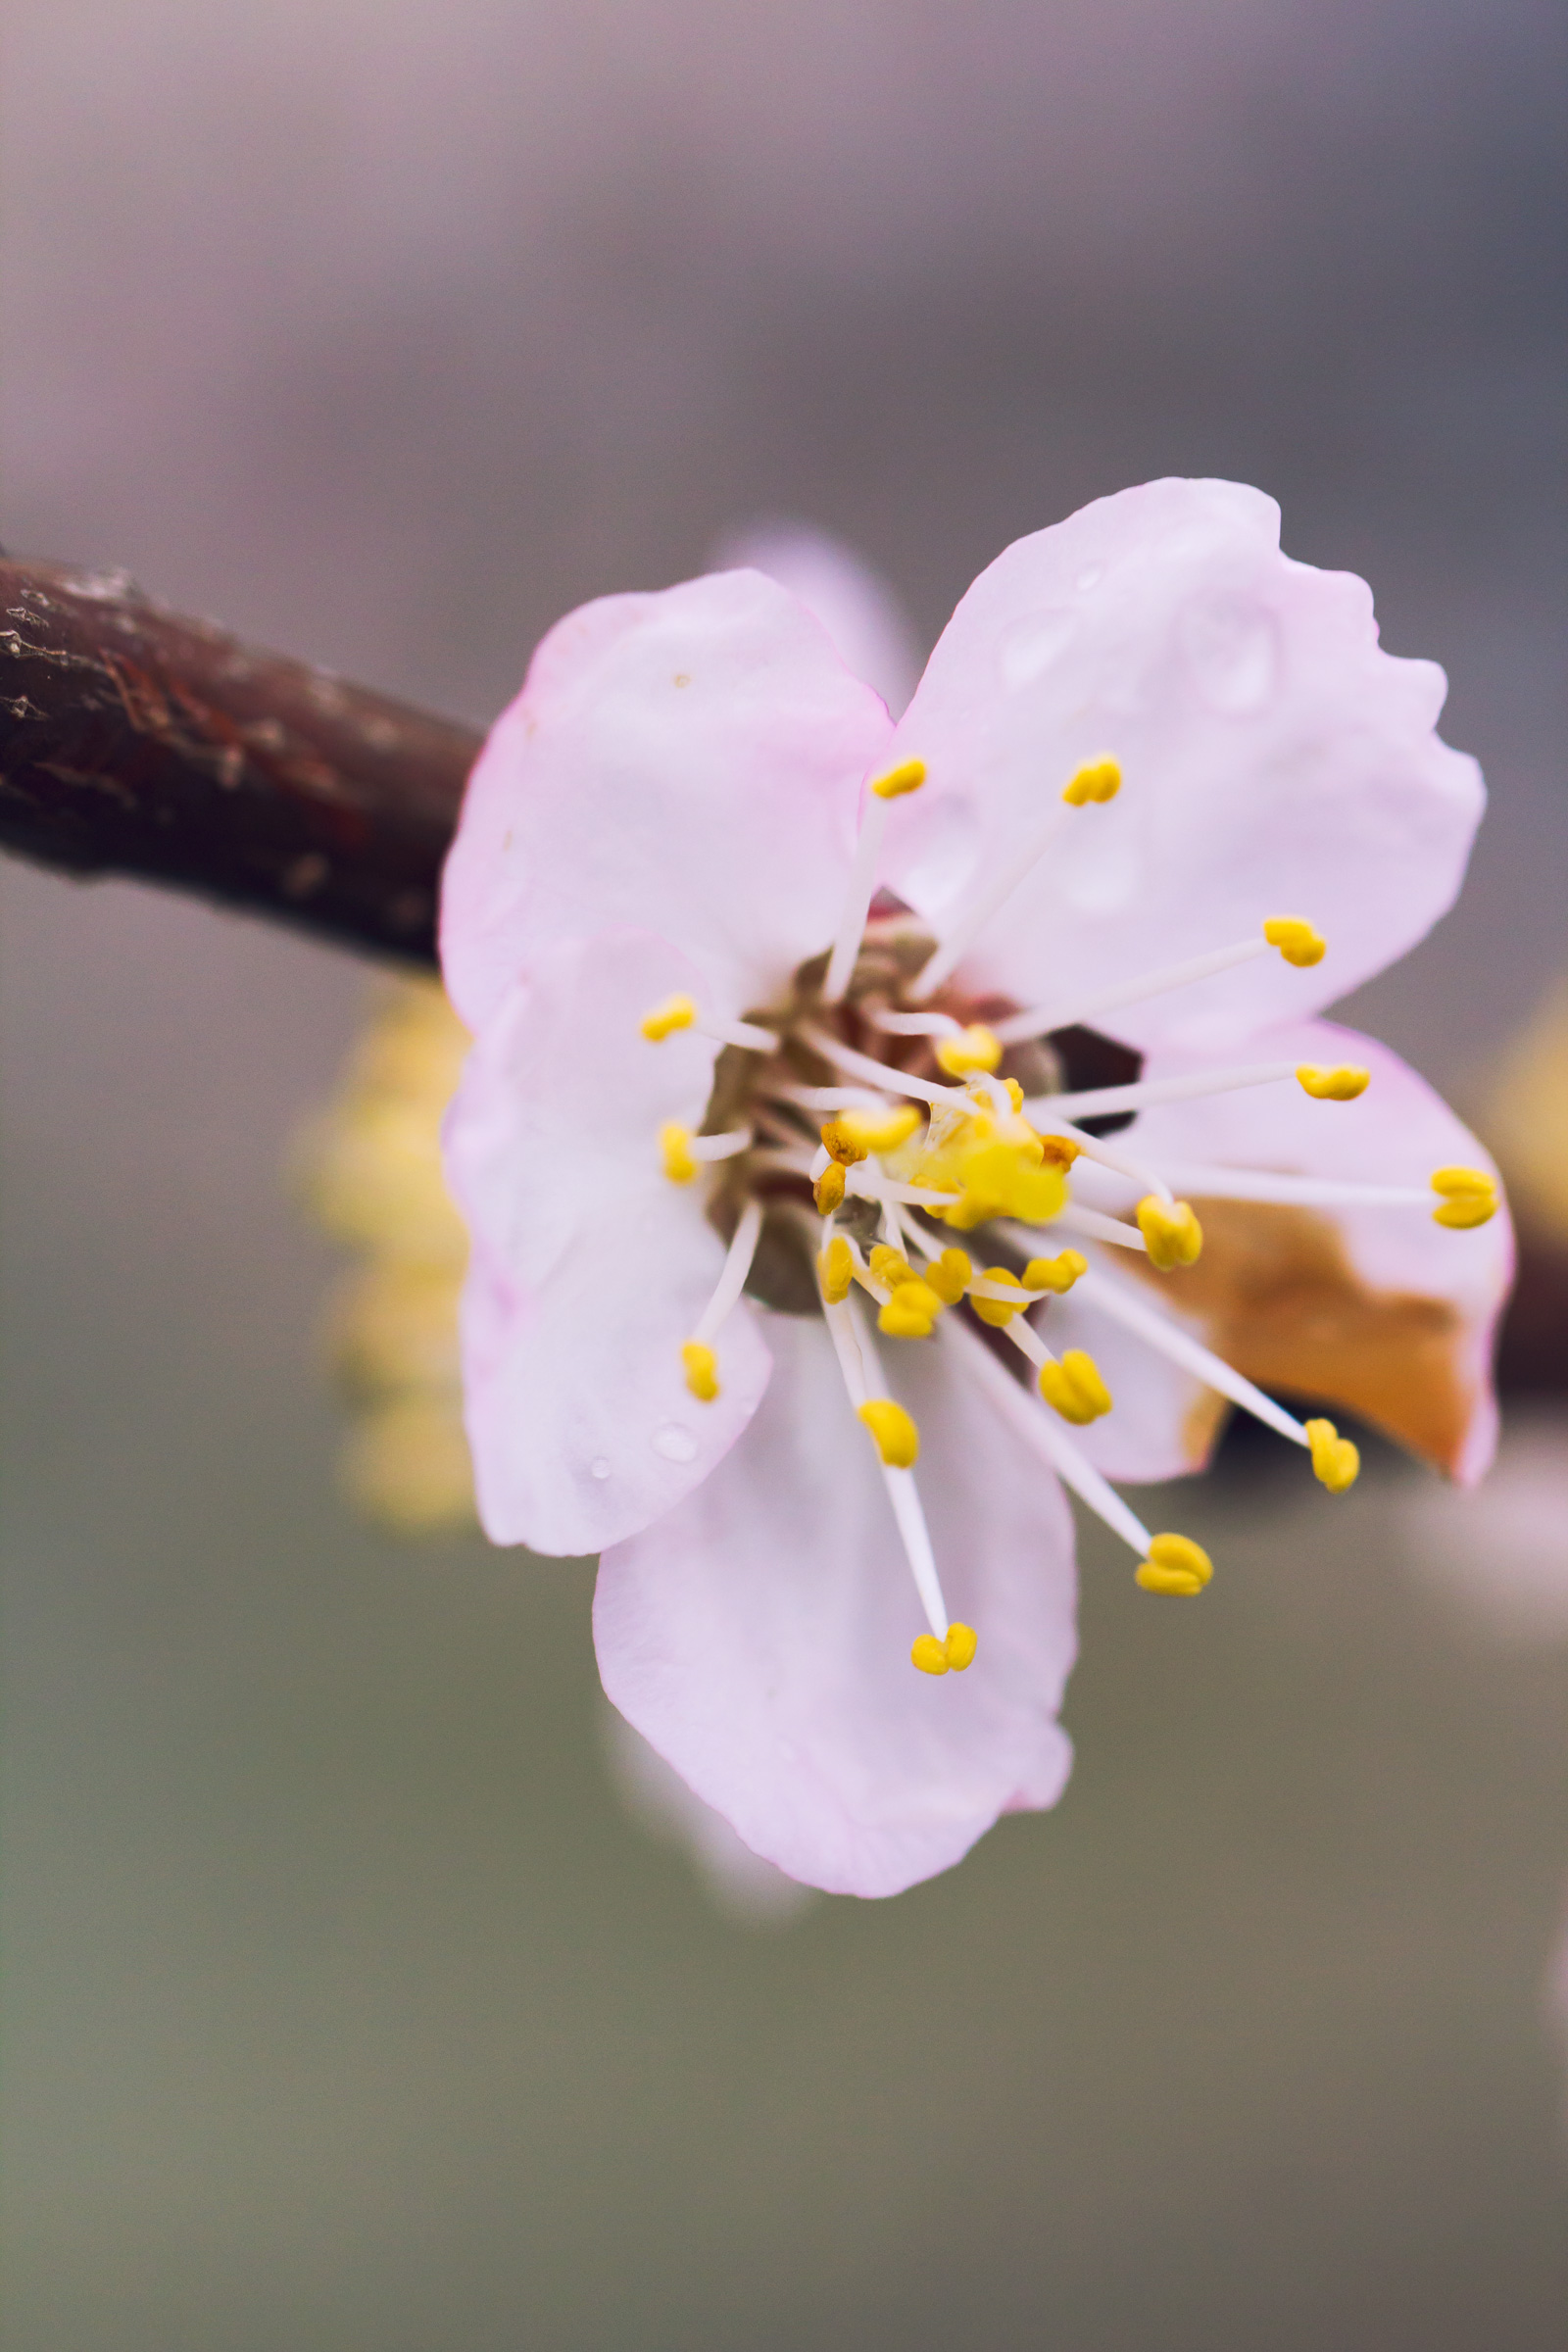 Cherry flower close-up